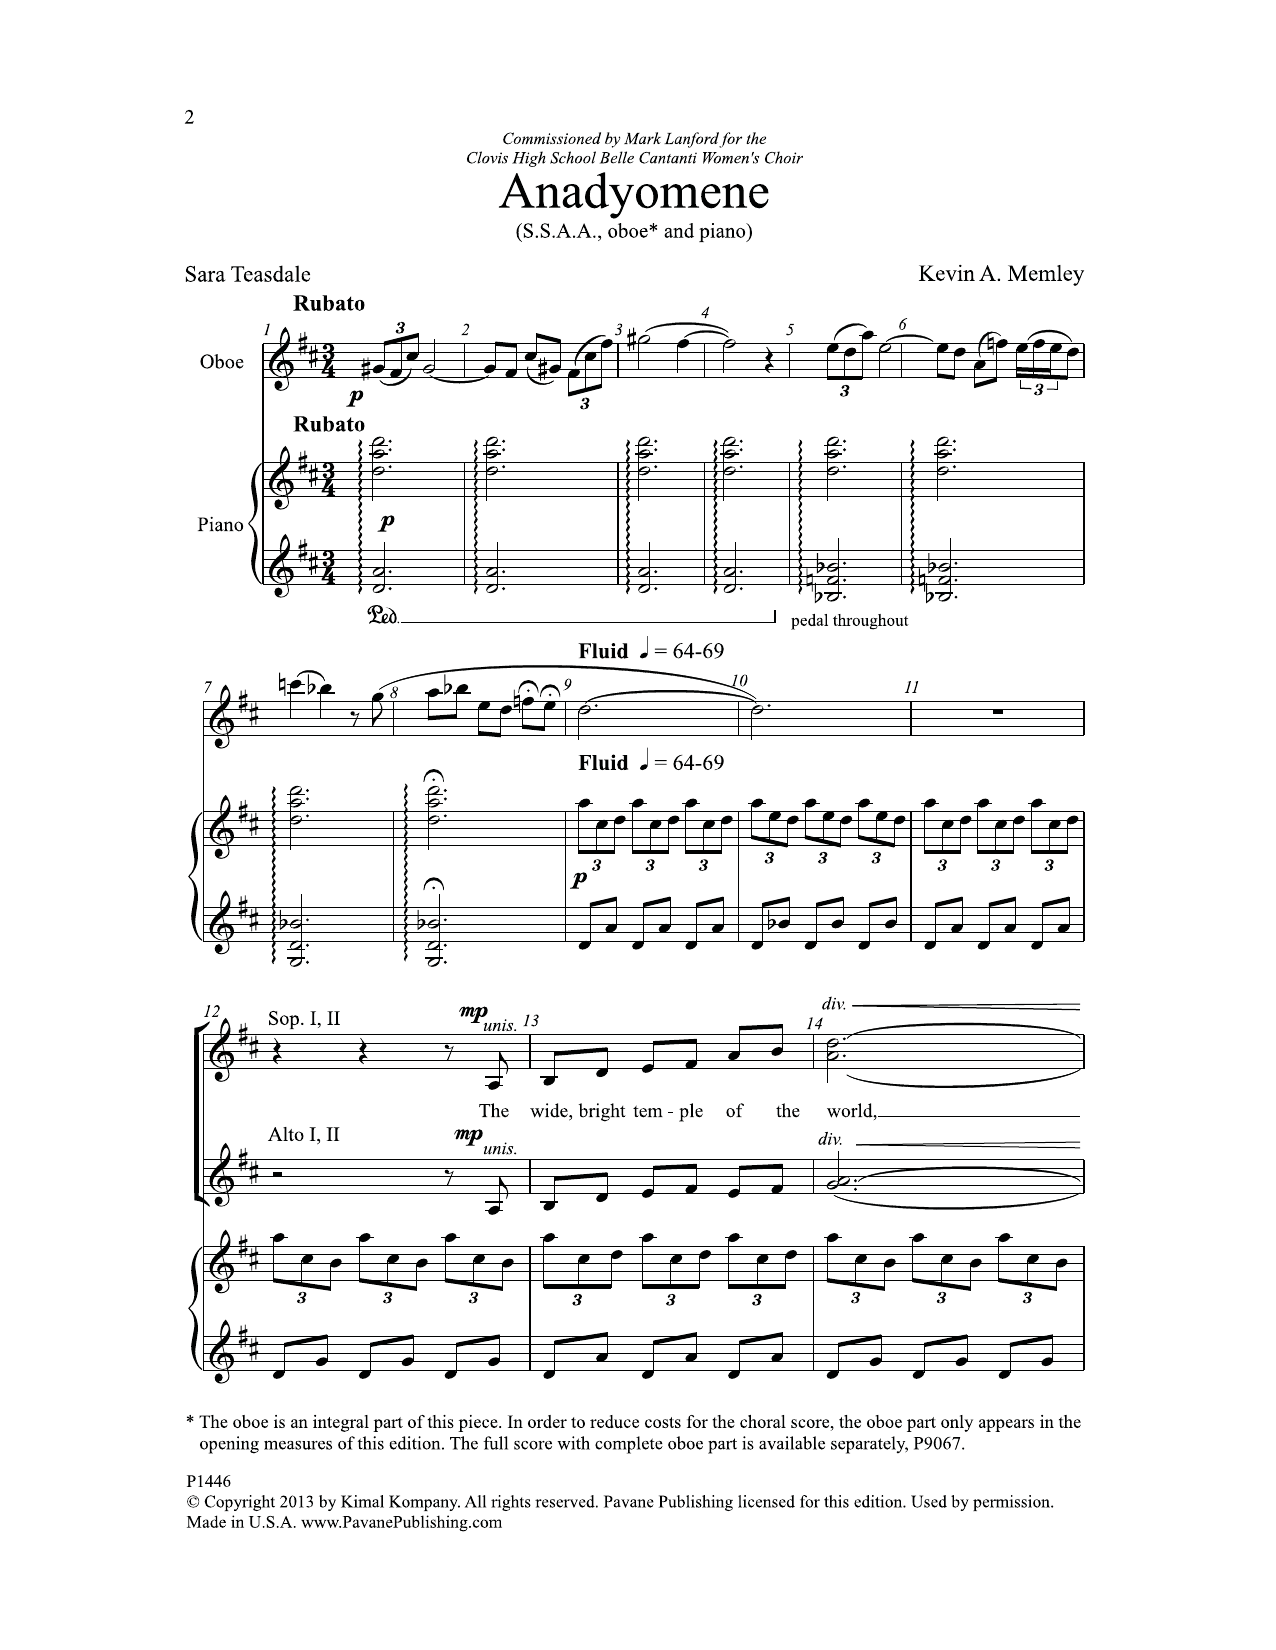 Sara Teasdale Anadyomene (of Supplication) Sheet Music Notes & Chords for Choral - Download or Print PDF